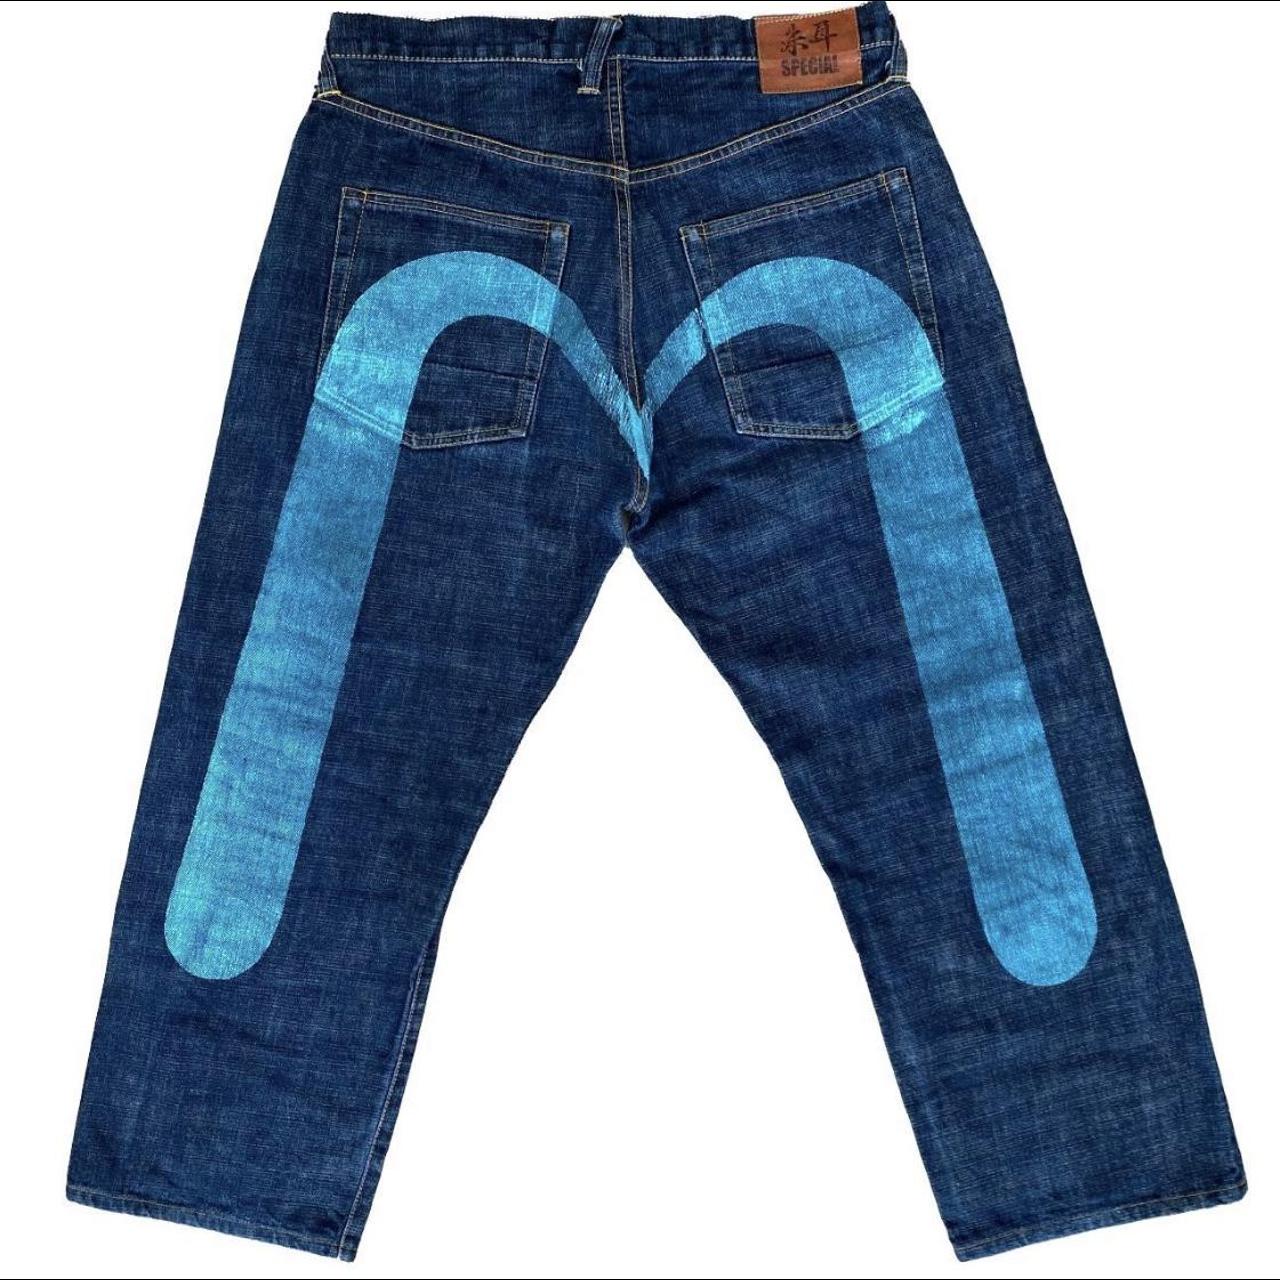 Evisu Men's Blue and Navy Jeans | Depop